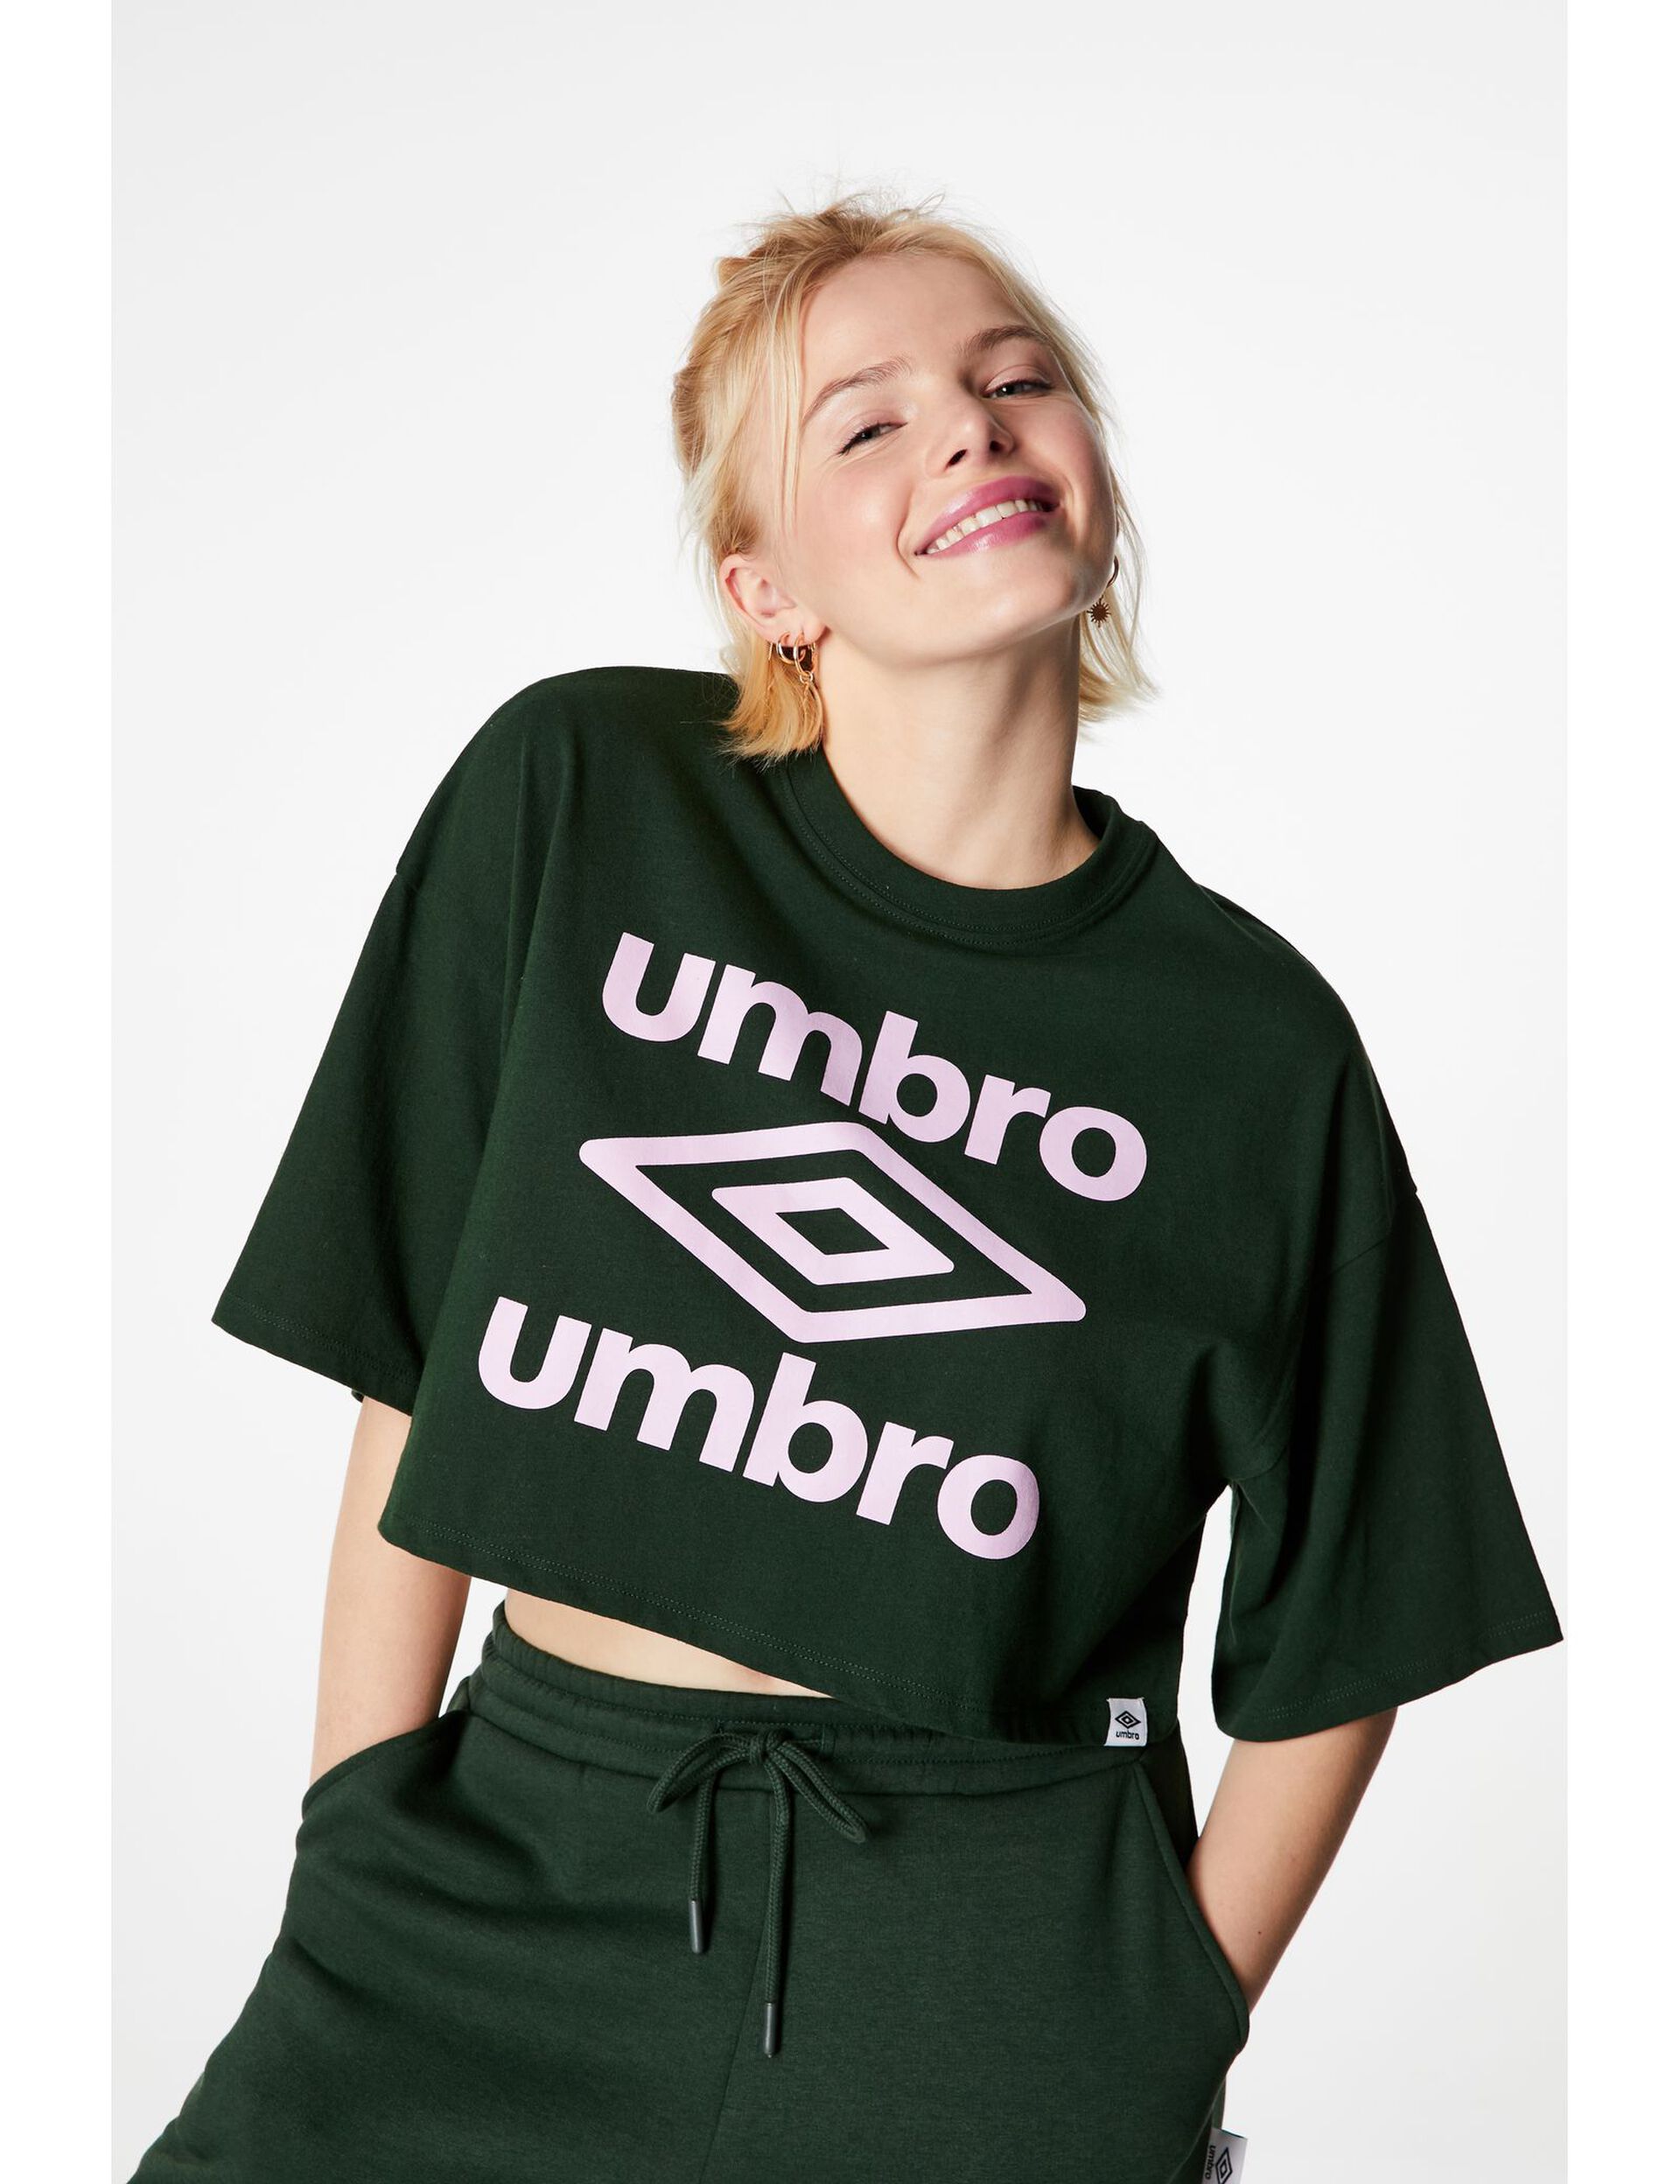 Tee-shirt Umbro court oversize